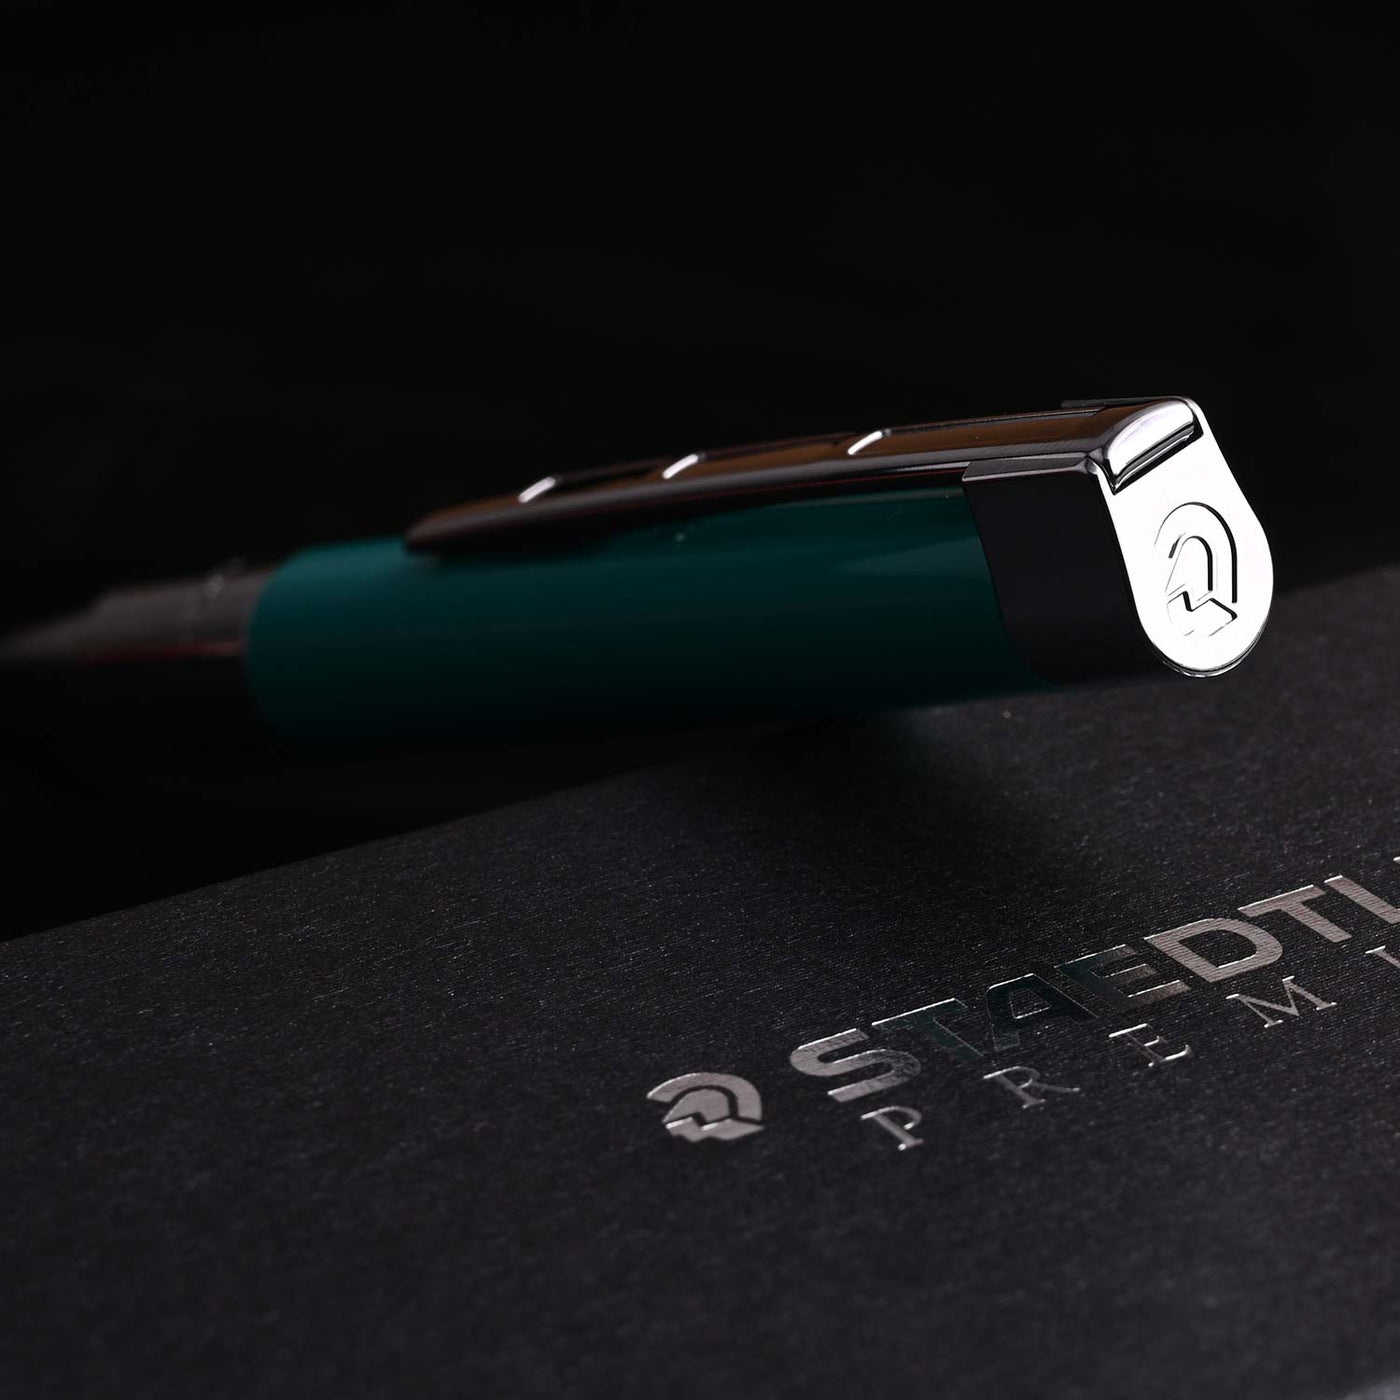 Staedtler Premium Resina 0.7mm Mechanical Pencil - Turquoise CT